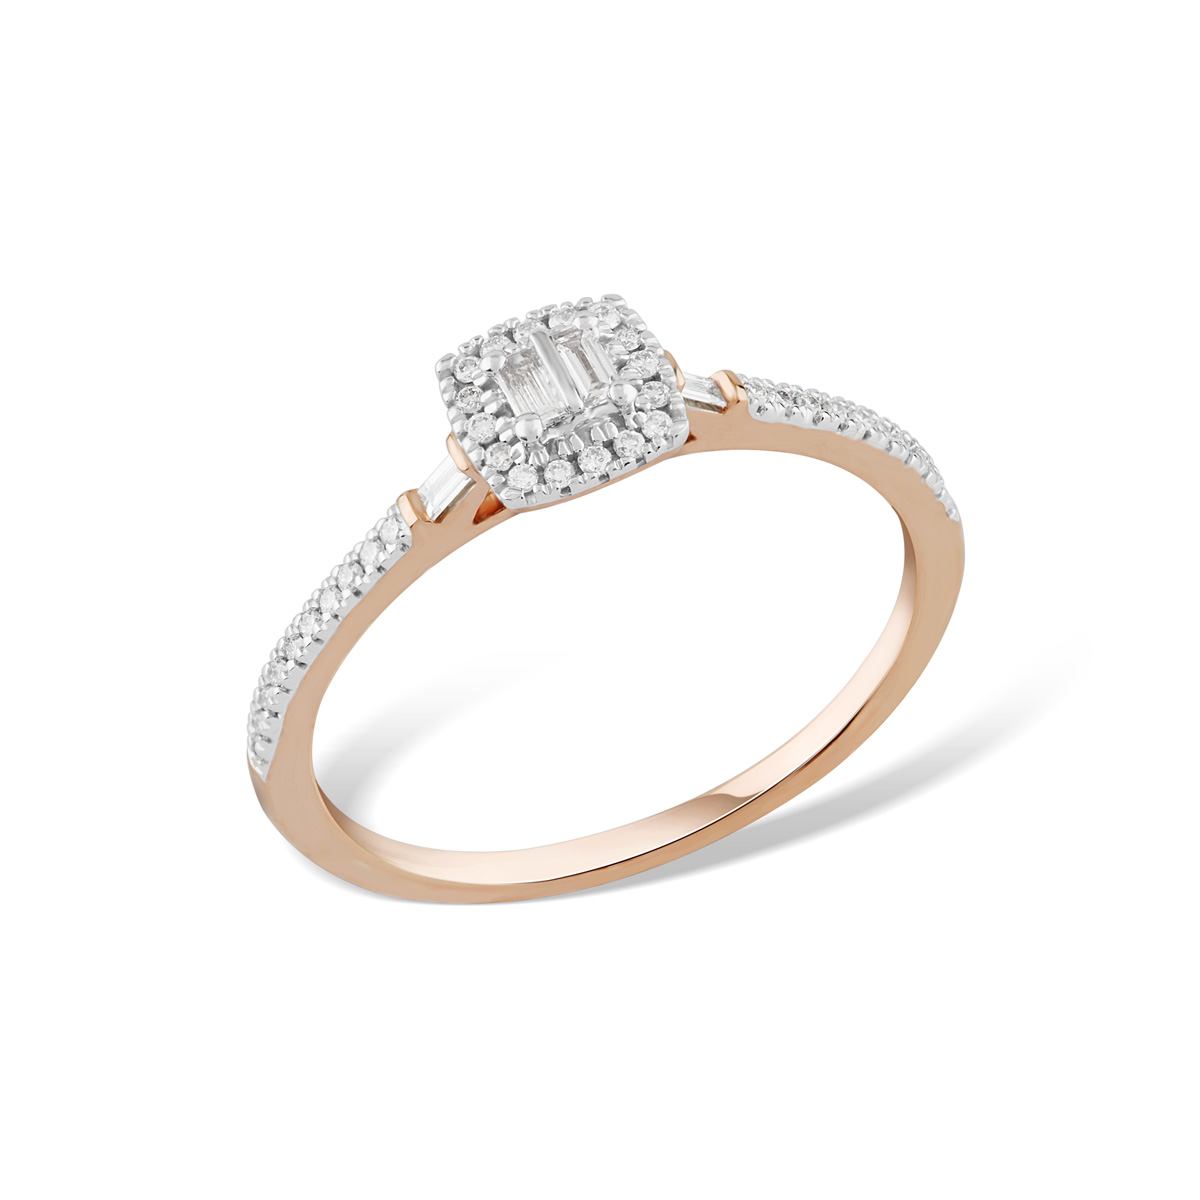 FI52577RWD4RP
14K rose gold diamond ring